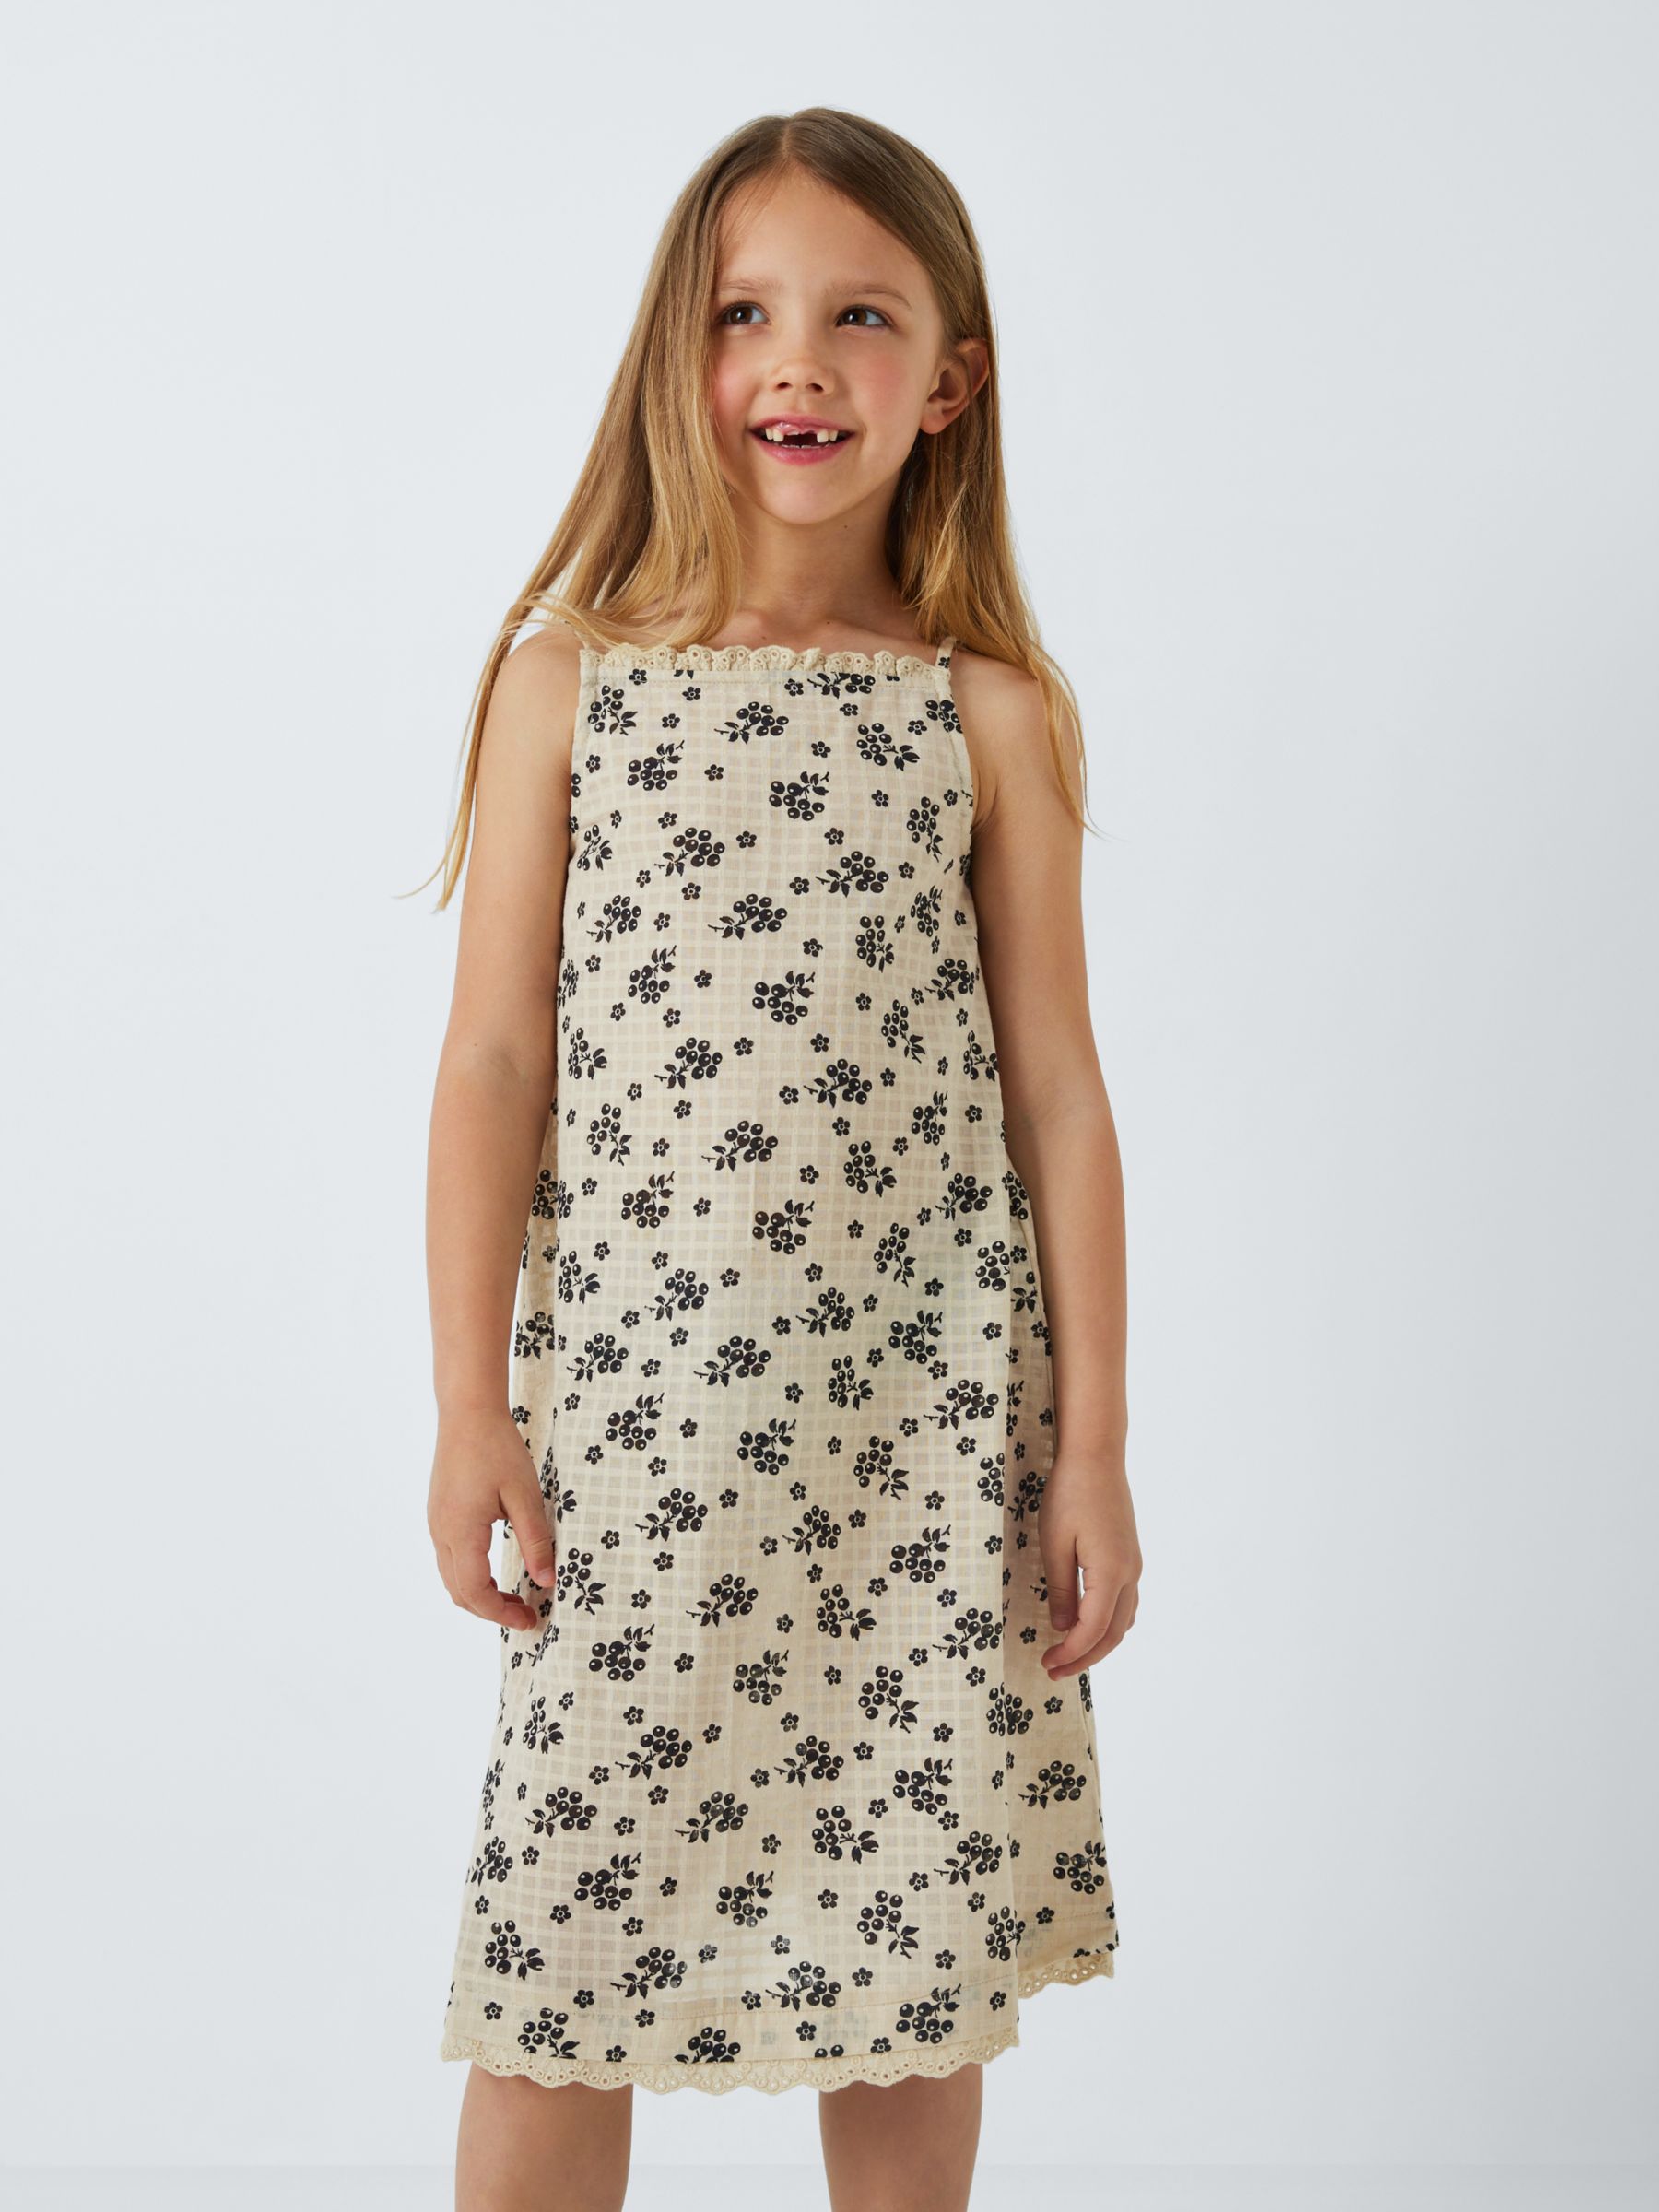 Caramel Kids' Hyssop Berry Bud Print Summer Dress, Off White/Navy, 8 years